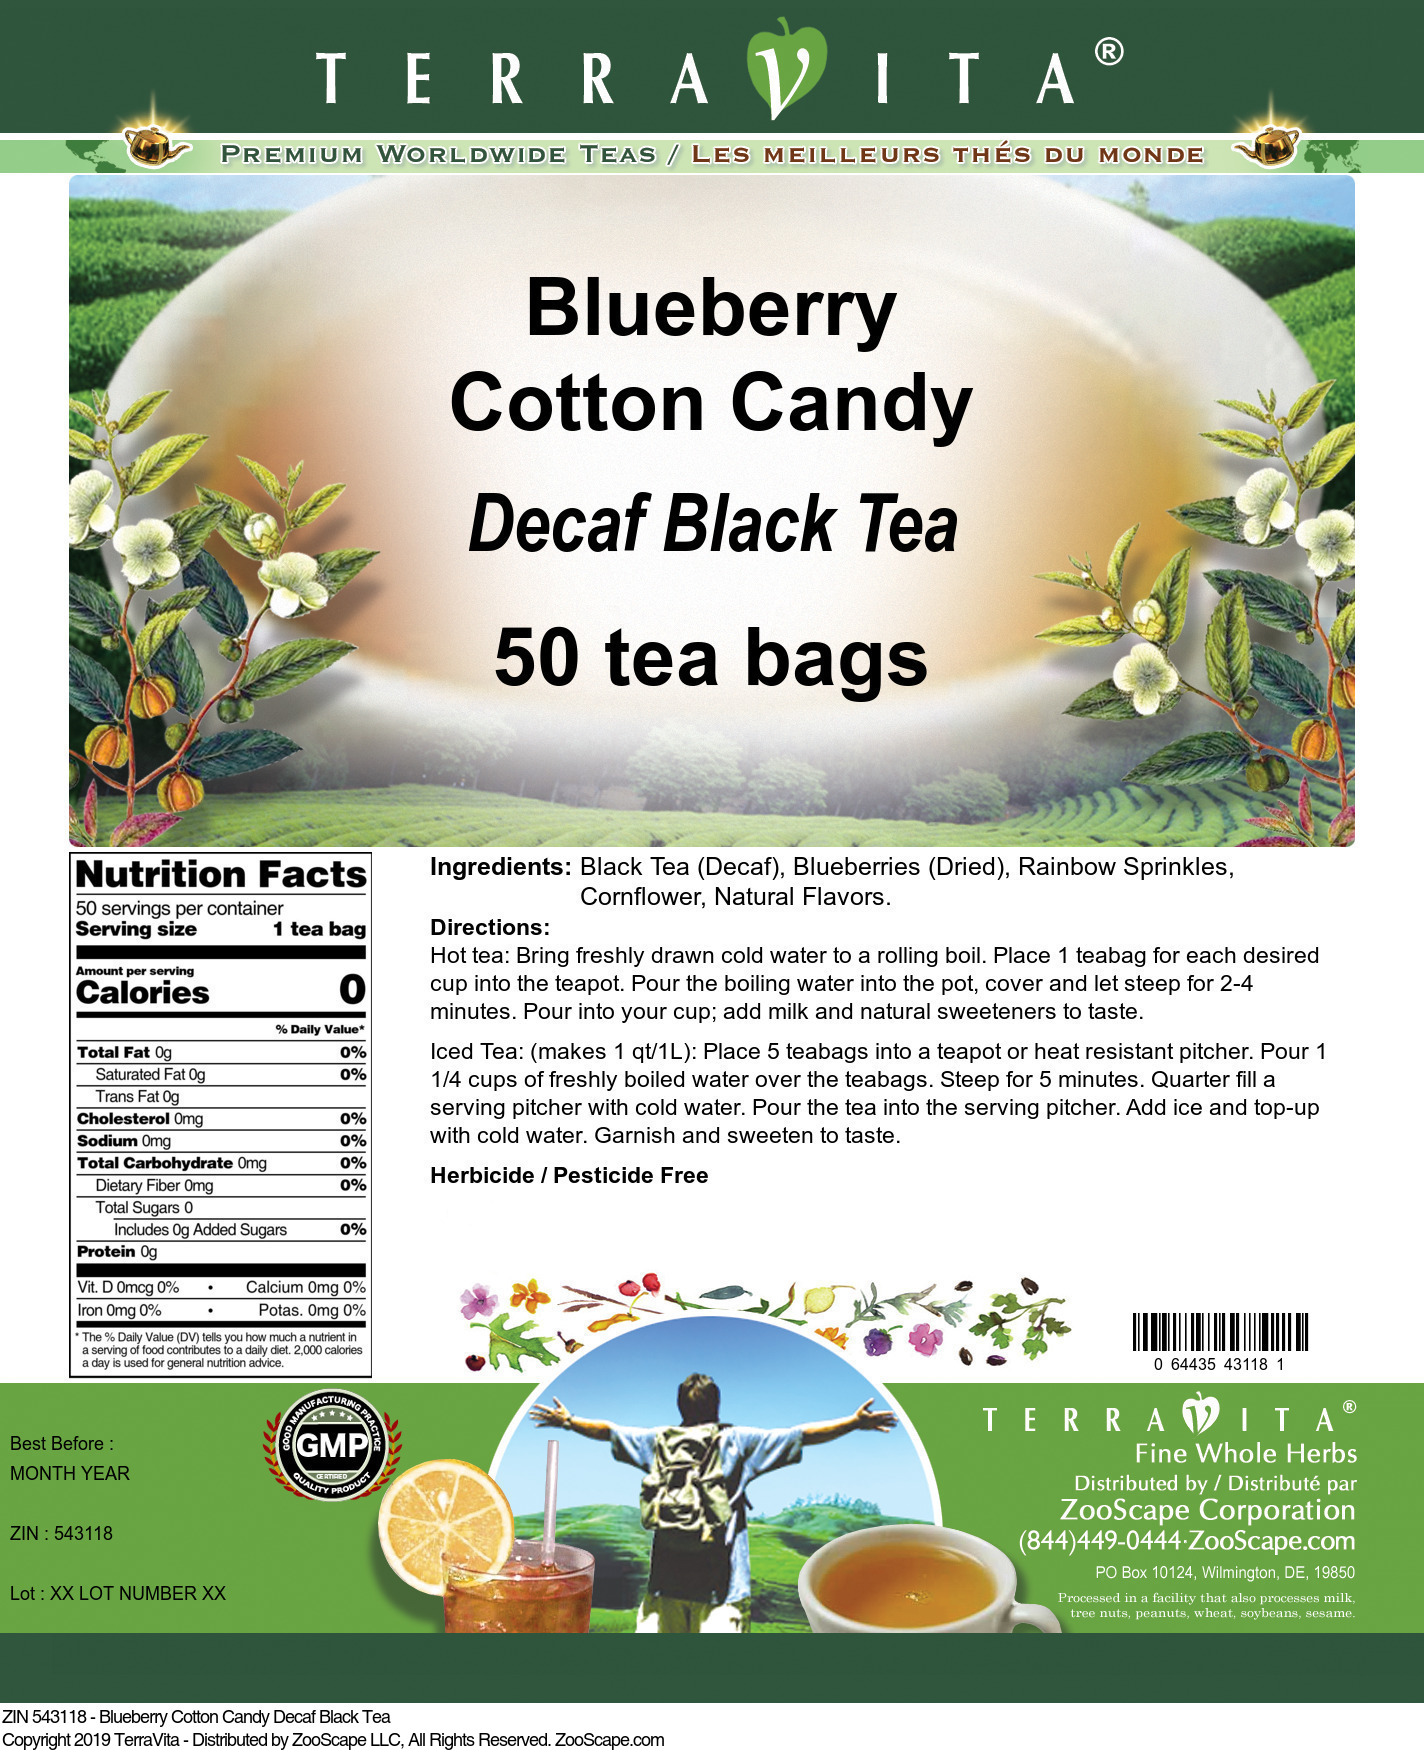 Blueberry Cotton Candy Decaf Black Tea - Label